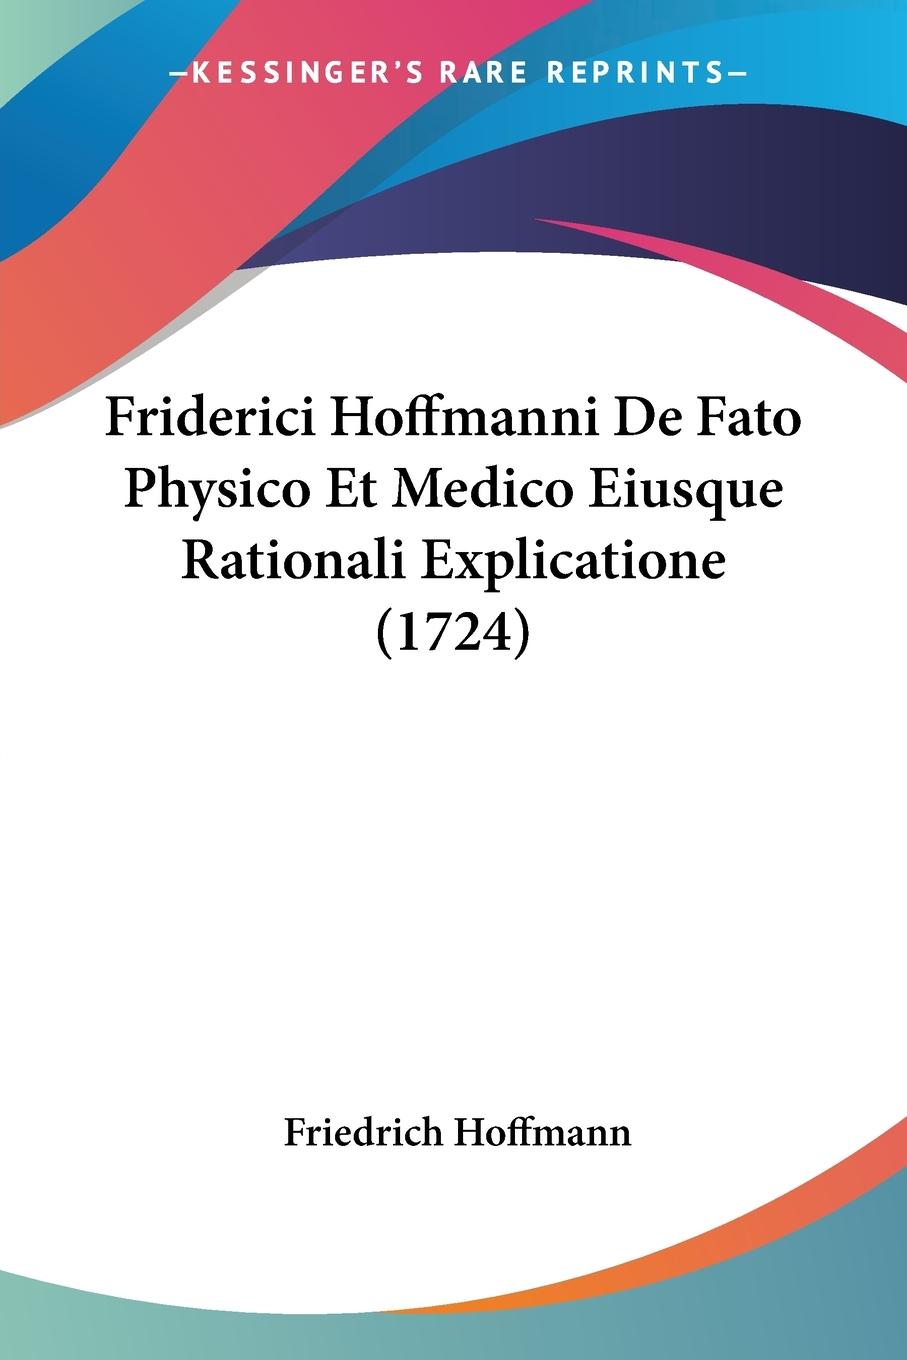 Friderici Hoffmanni De Fato Physico Et Medico Eiusque Rationali Explicatione (1724) - Hoffmann, Friedrich